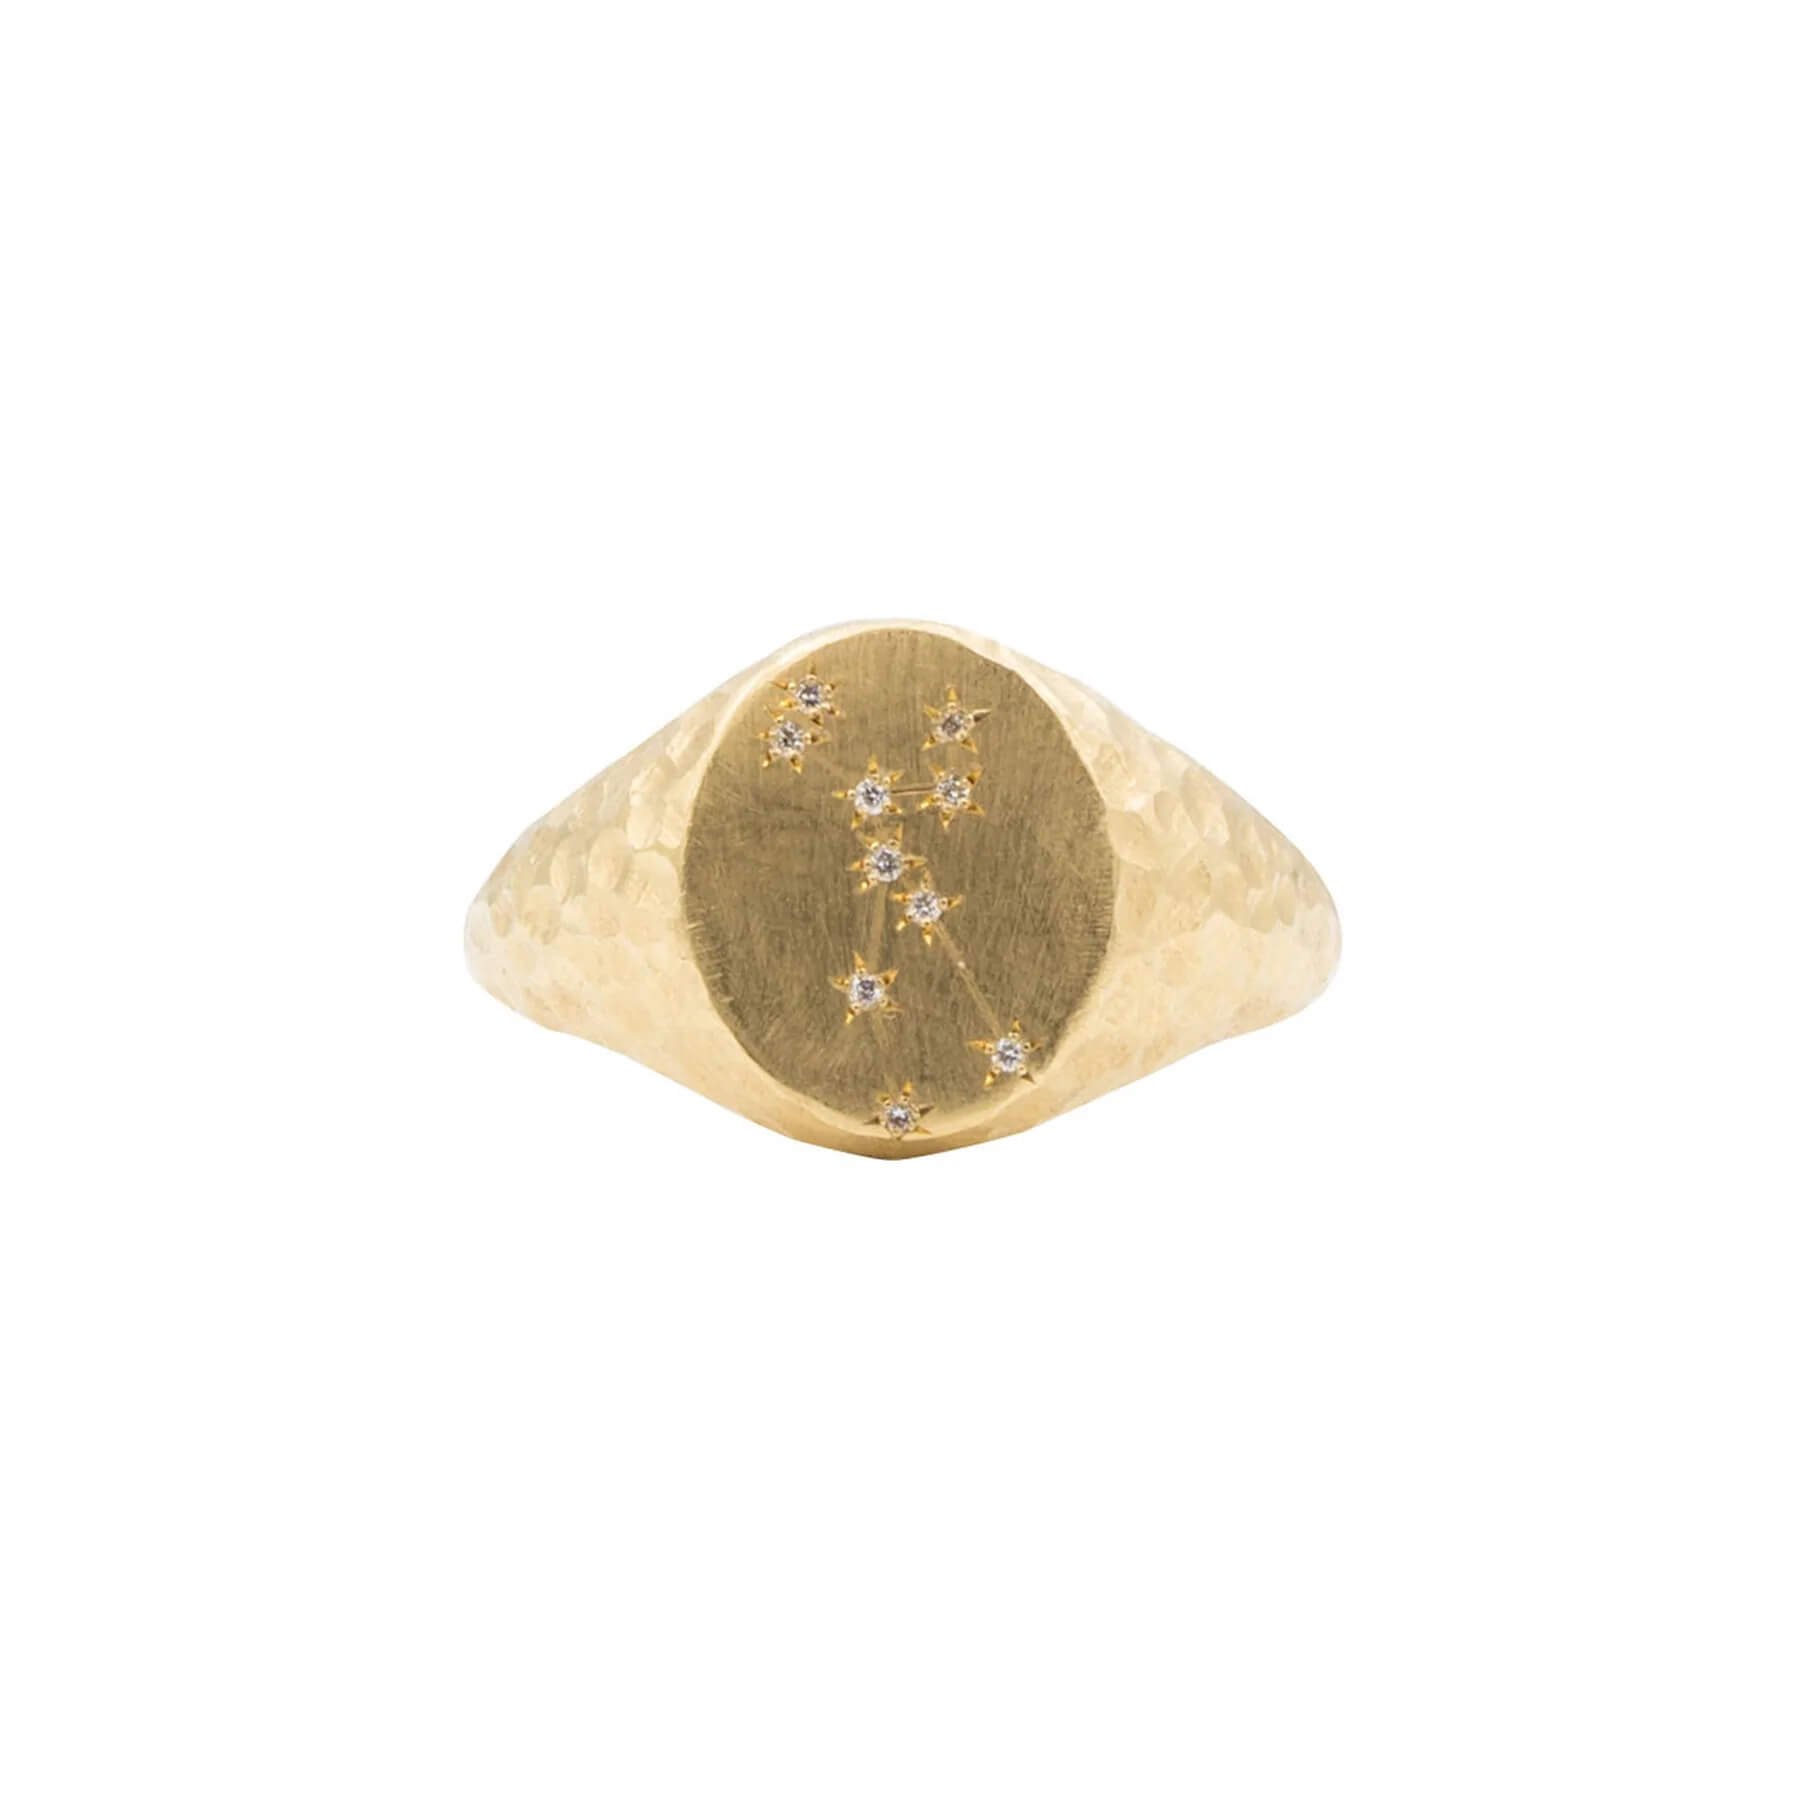 Octavia Elizabeth Gold and White Diamond Sagittarius Celestial Signet Ring, $2,800 at The Vault Nantucket